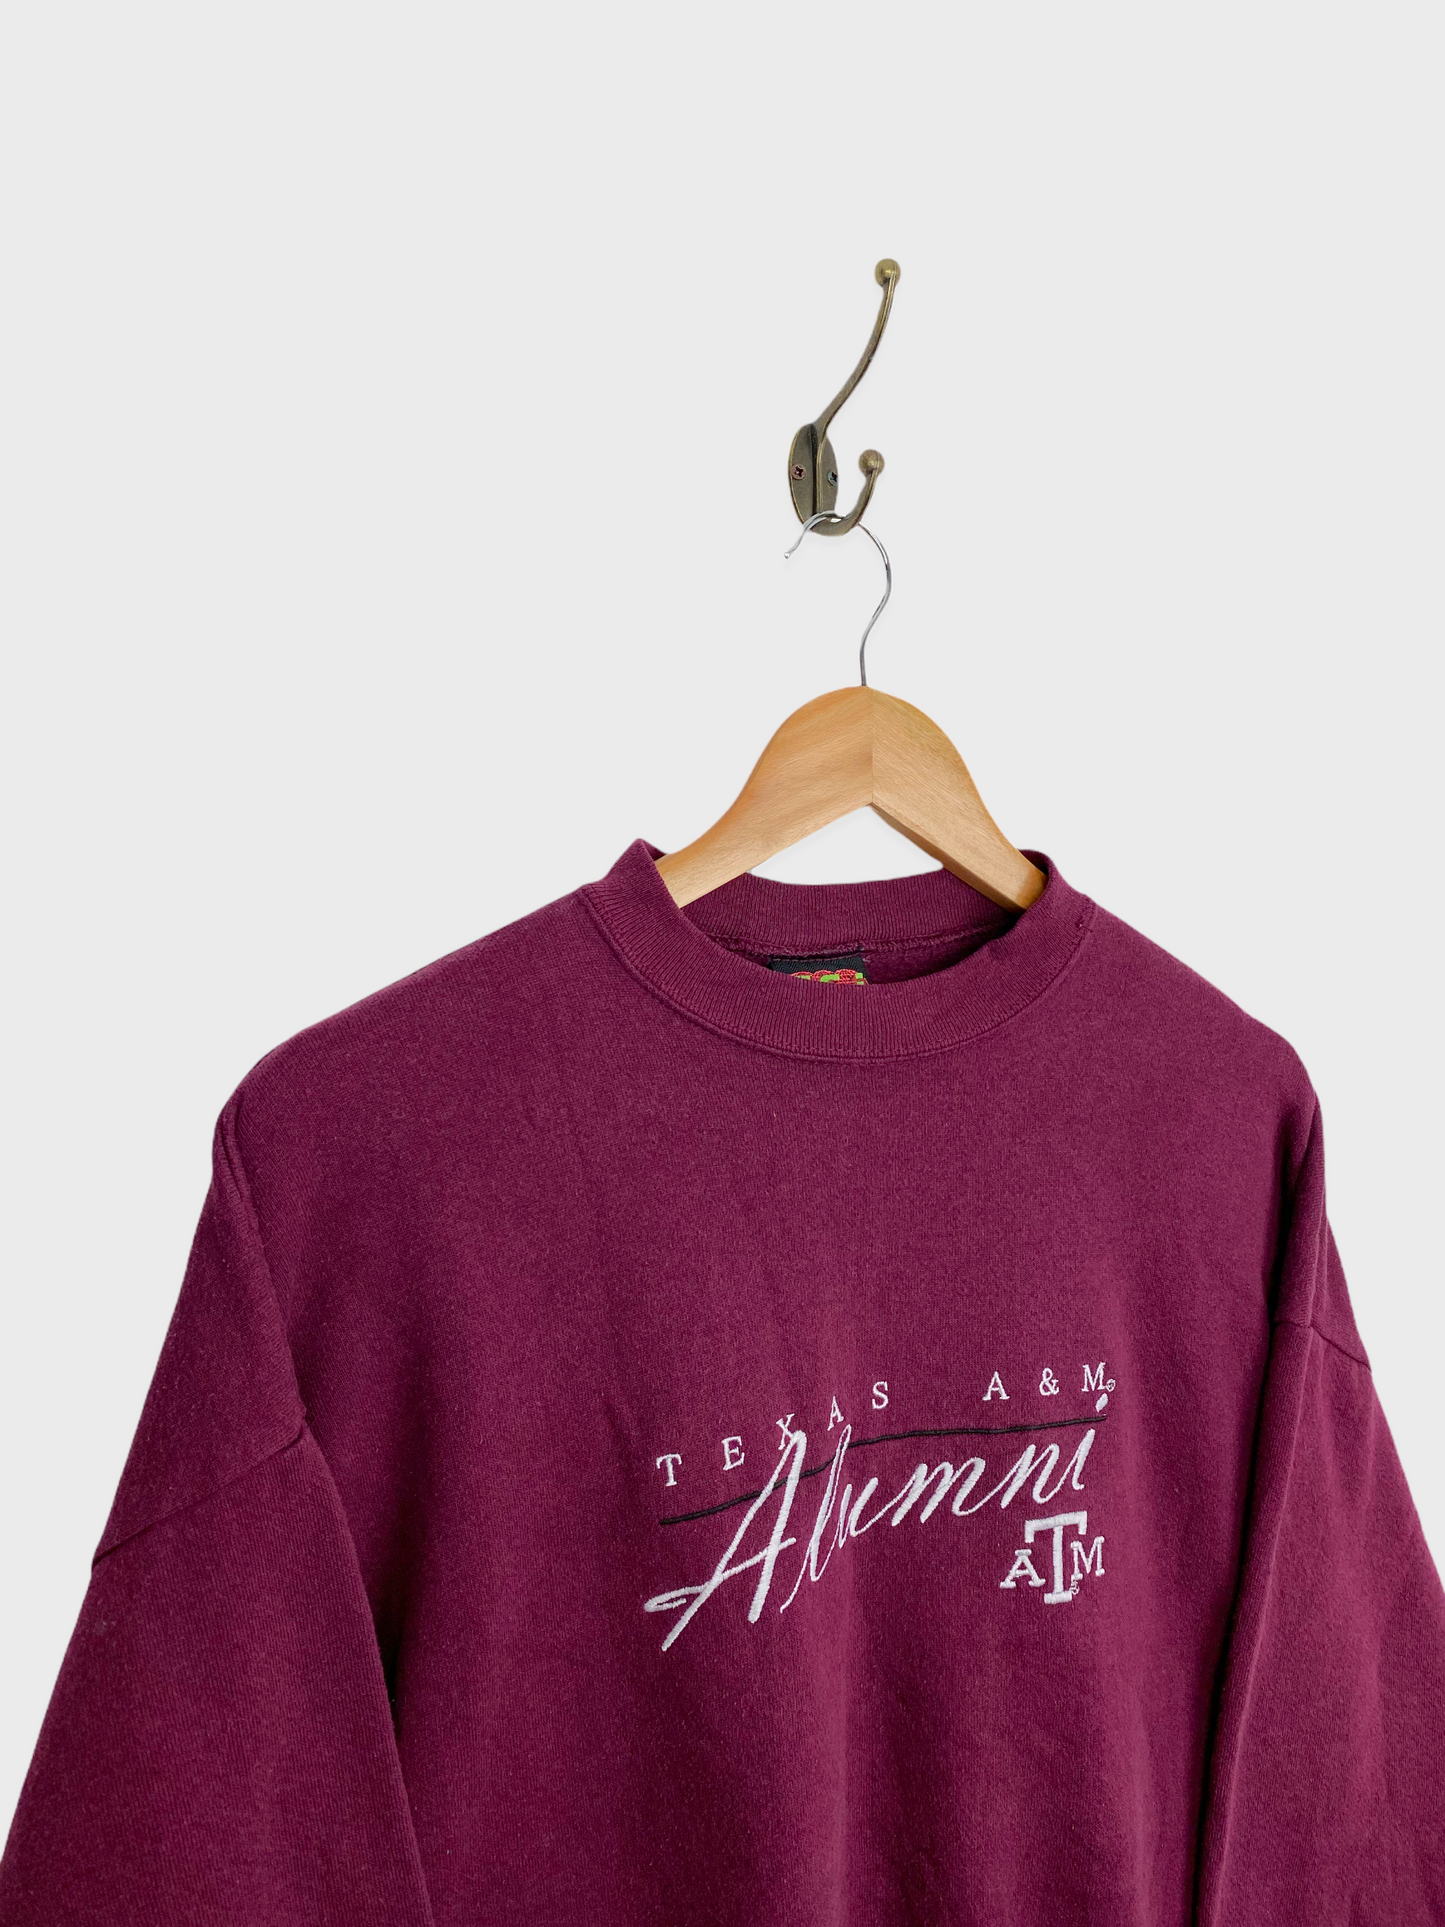 90's Texas A&M Alumni USA Made Embroidered Vintage Sweatshirt Size 10